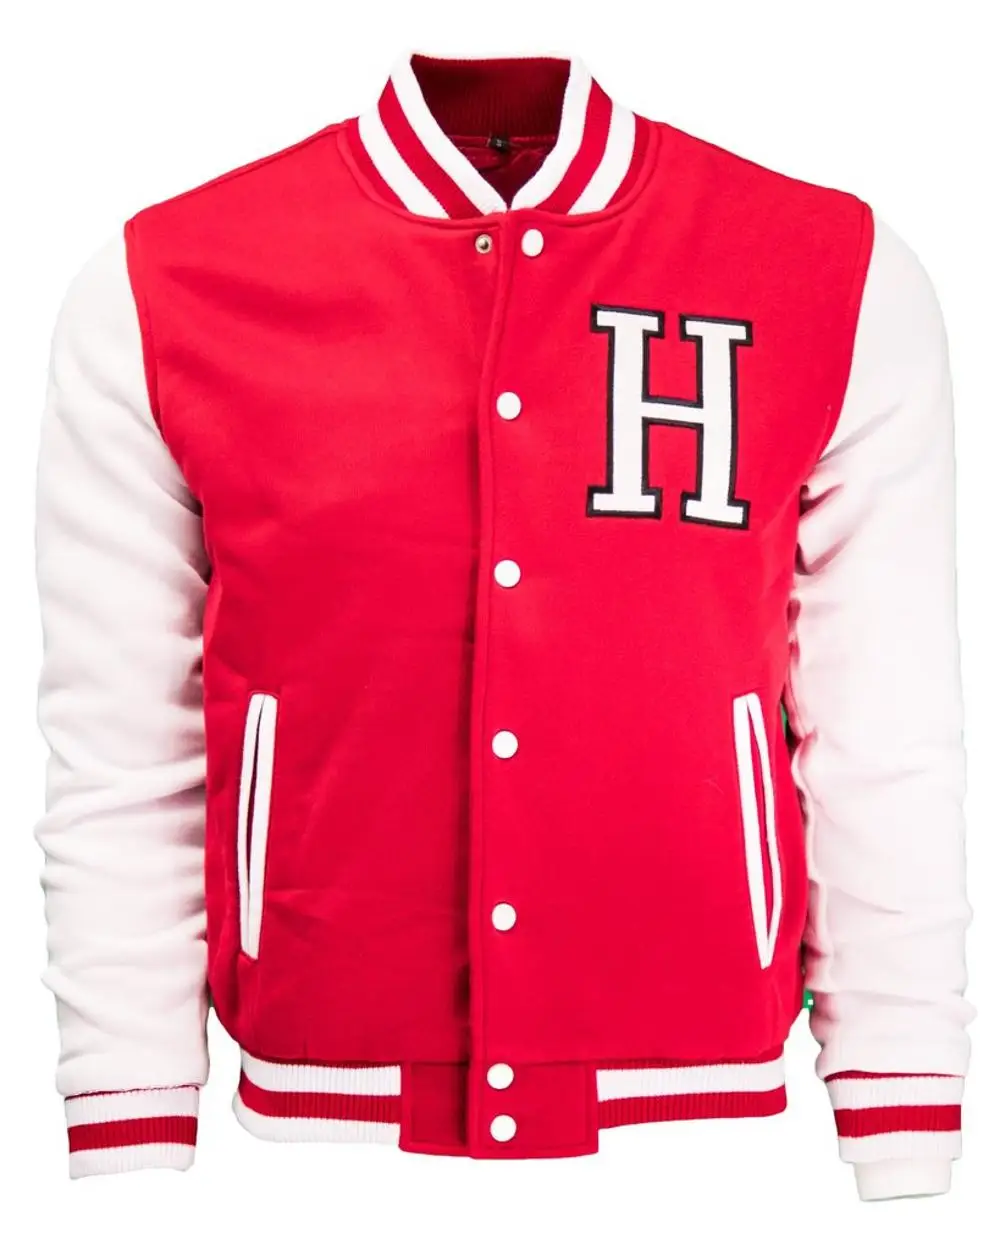 Бомбер для мужчин. Куртка Varsity Jacket бейсбольная. Университетская куртка Letterman Red. Бомбер Varsity Jacket. Бомбер мужской Varsity Jacket.